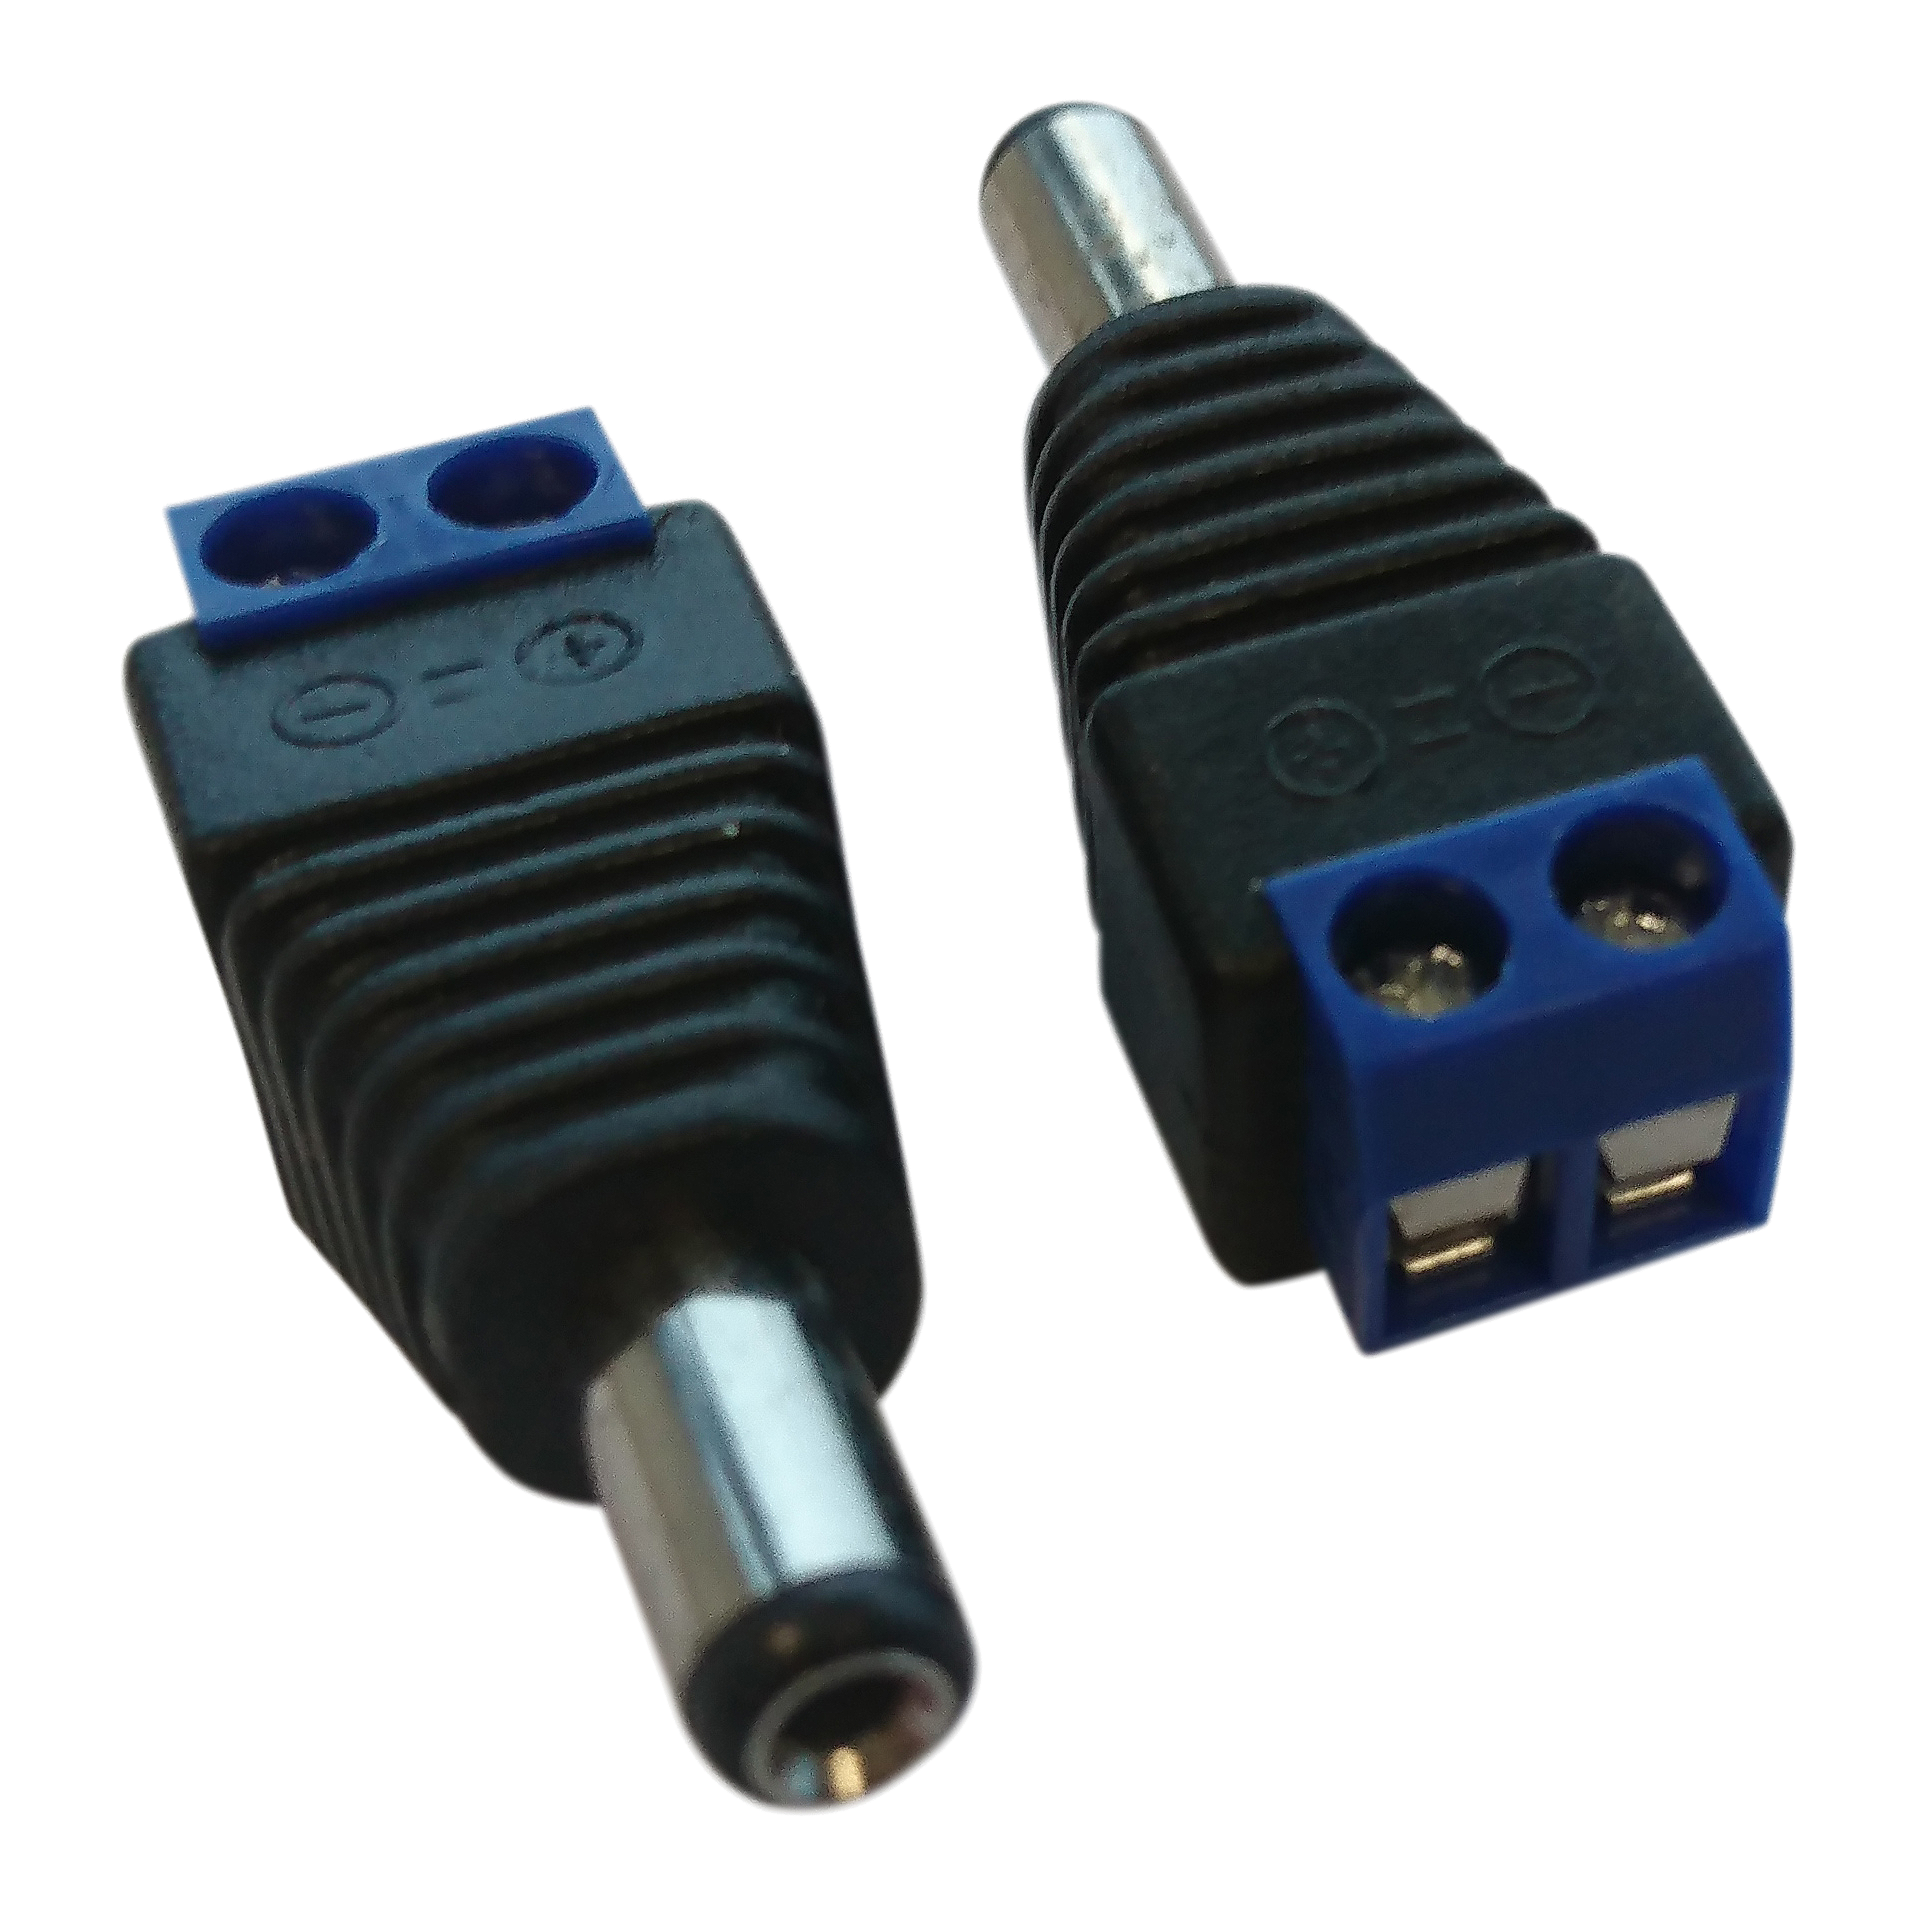 DC plug female with screw terminals